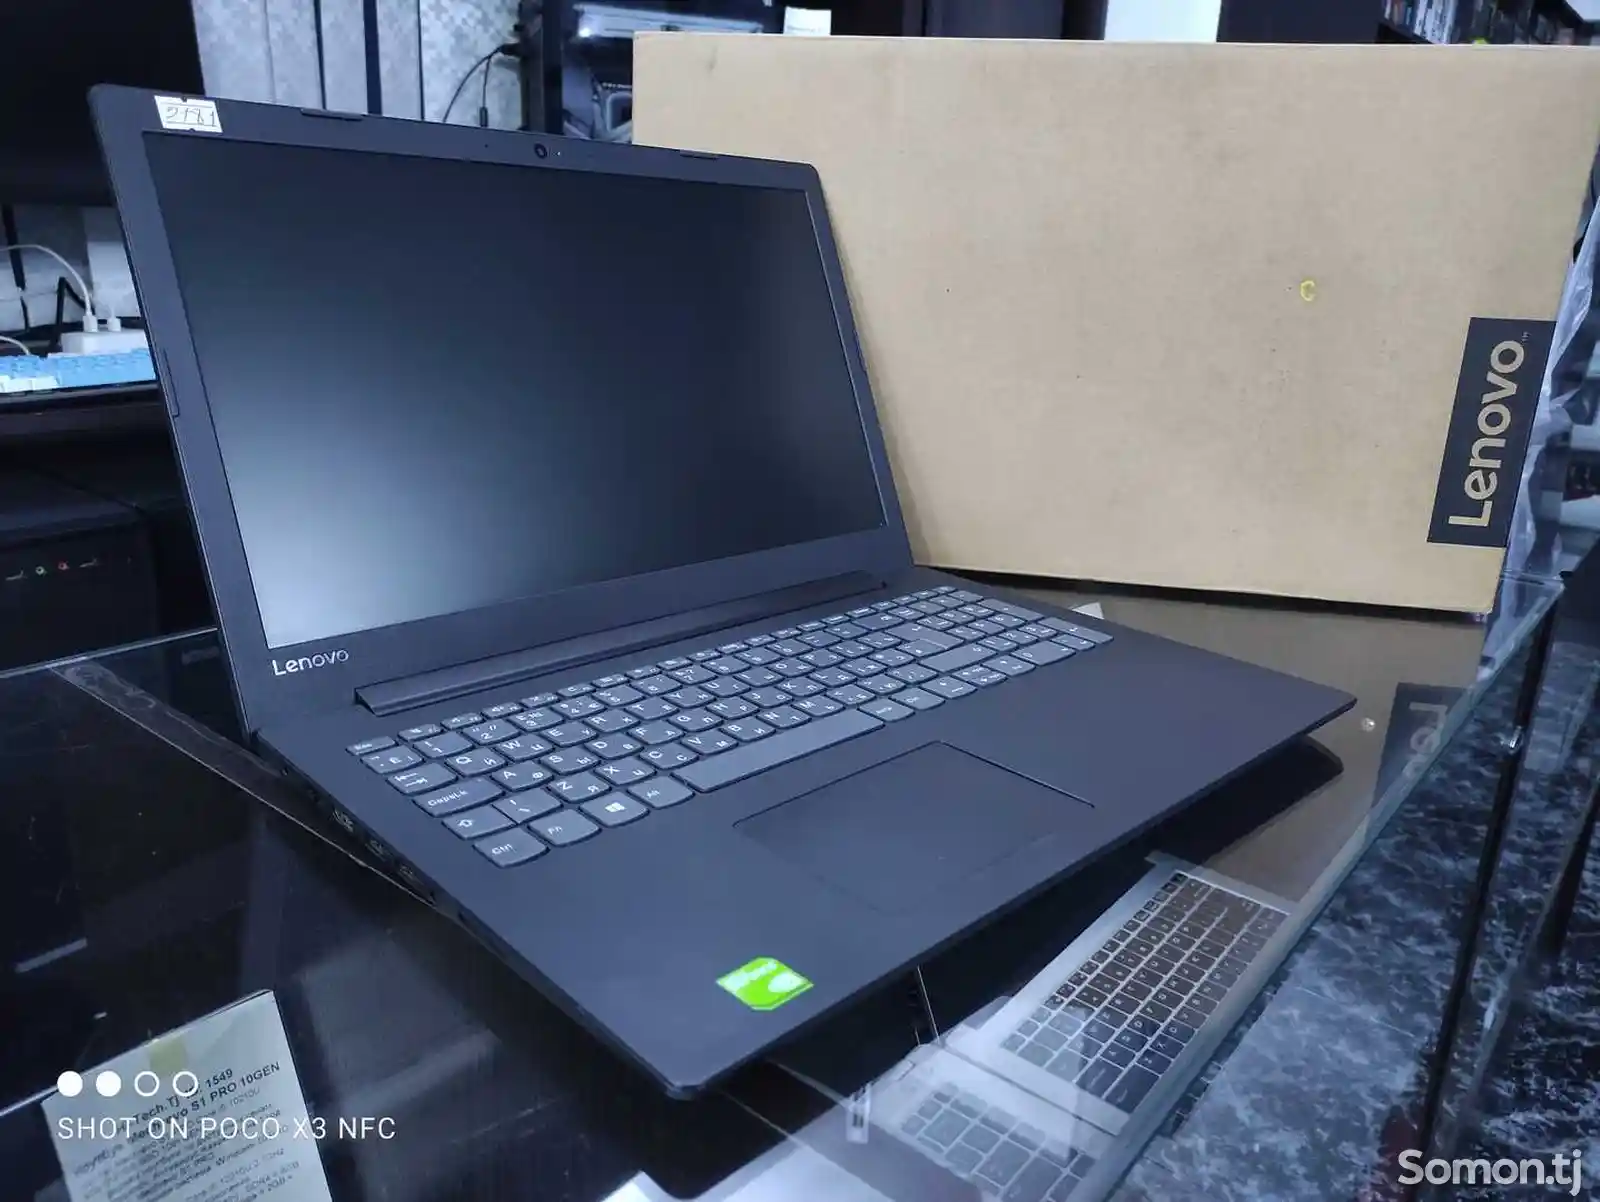 Игровой ноутбук Lenovo Ideapad 130 Core i7-8550U 8gb/1tb 8th GEN-5